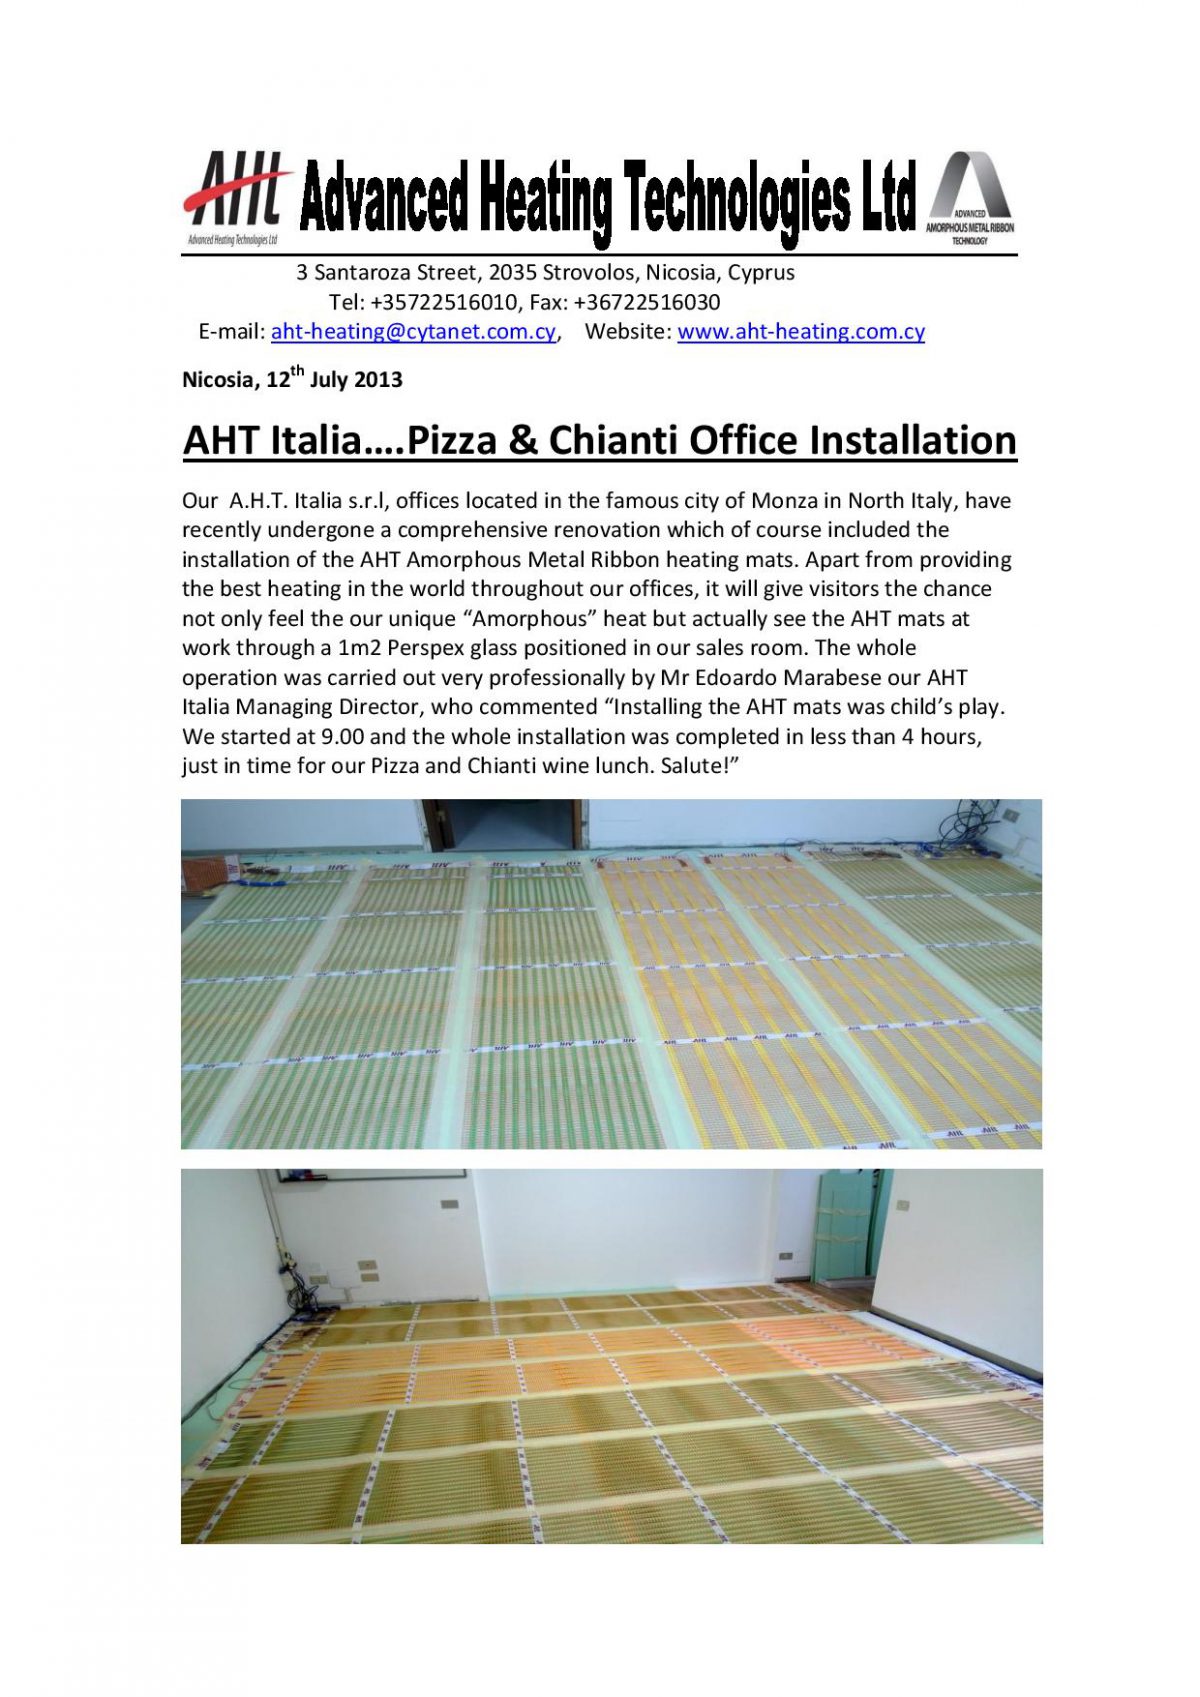 AHT-Italia-Pizza-Chianti-Office-Installation-page-001-1200x1697